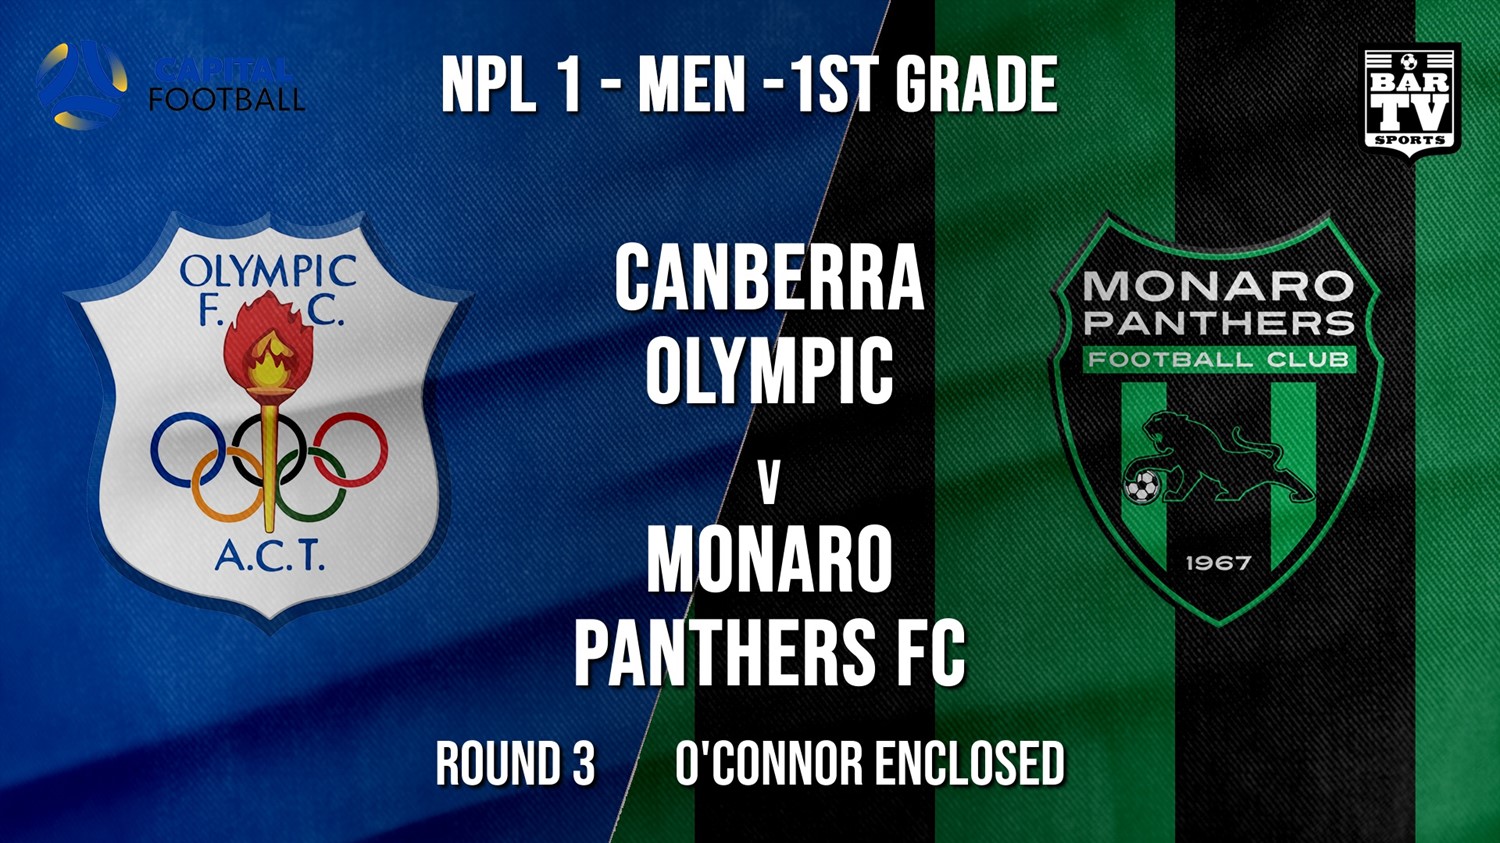 NPL - CAPITAL Round 3 - Canberra Olympic FC v Monaro Panthers FC Minigame Slate Image